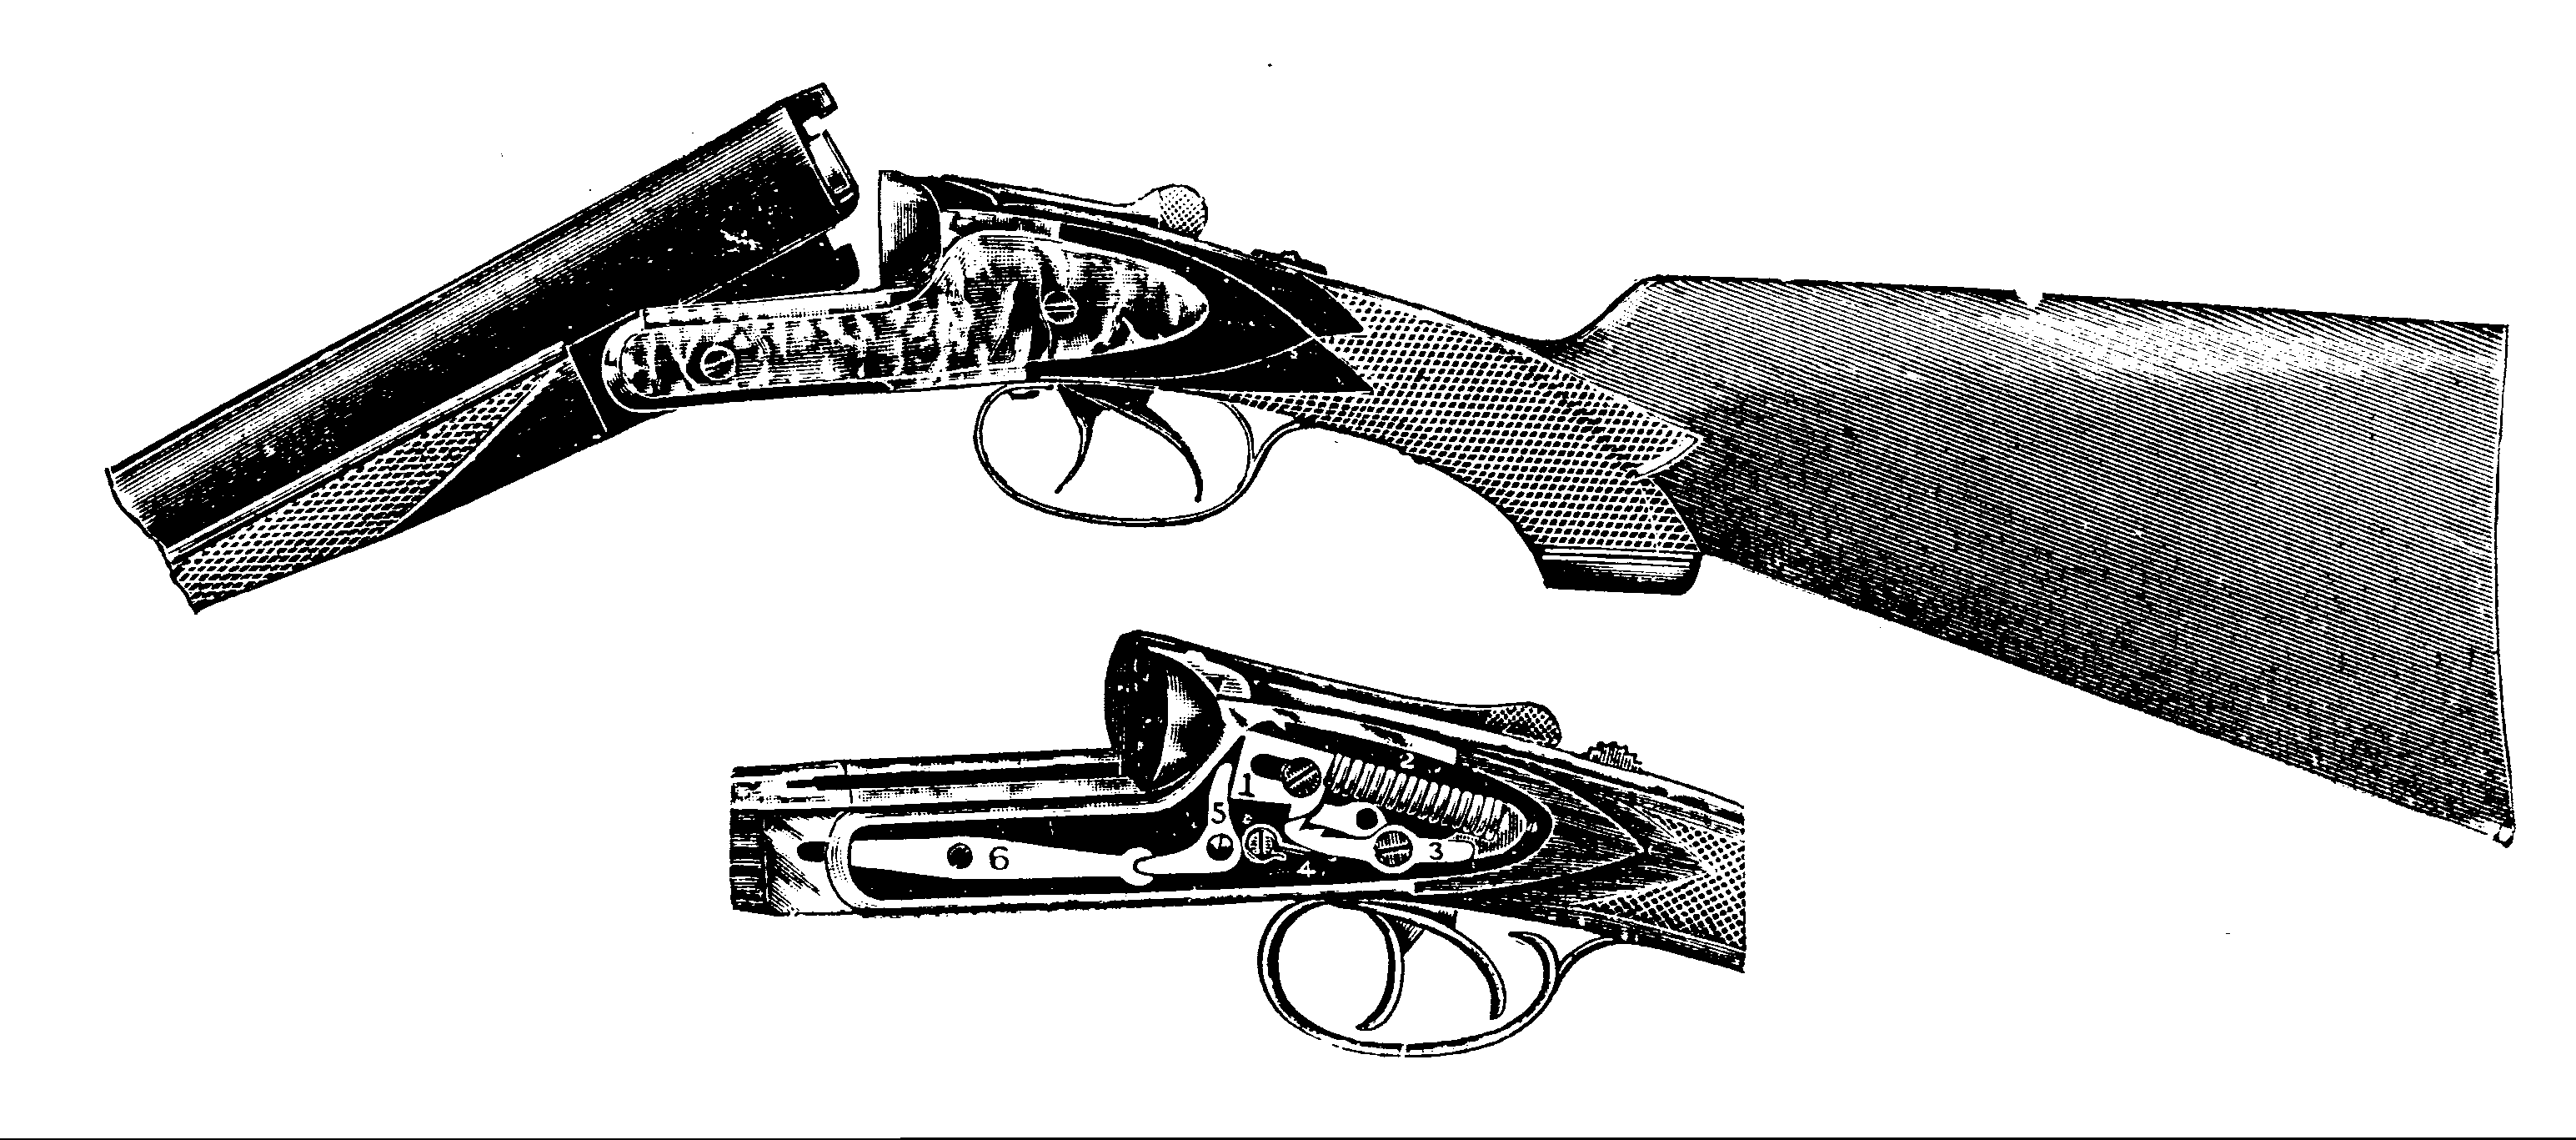 Double Barrel Shotguns